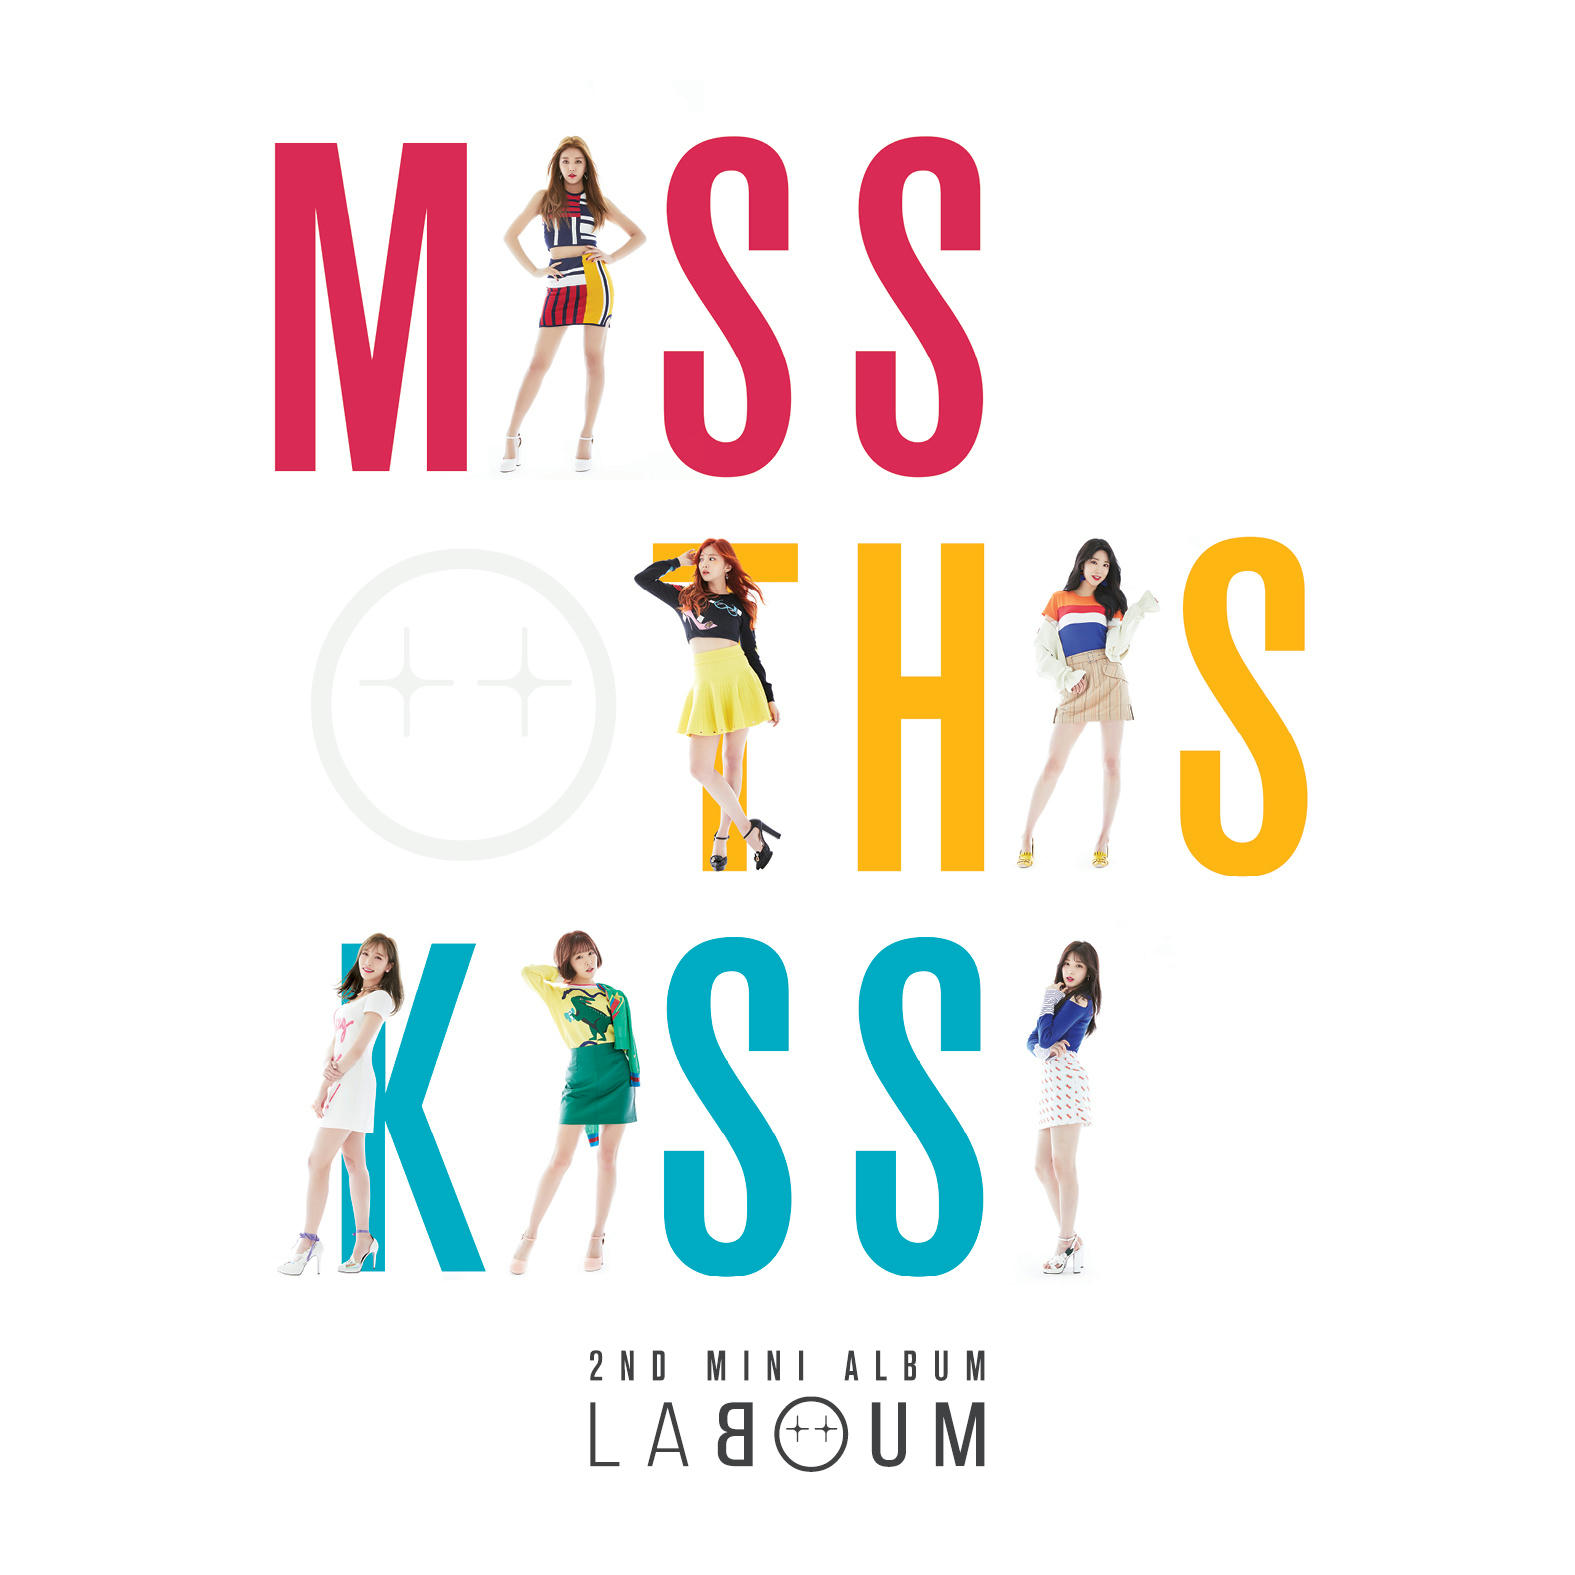 Drama Otaku Sub Mini Album Laboum Miss This Kiss